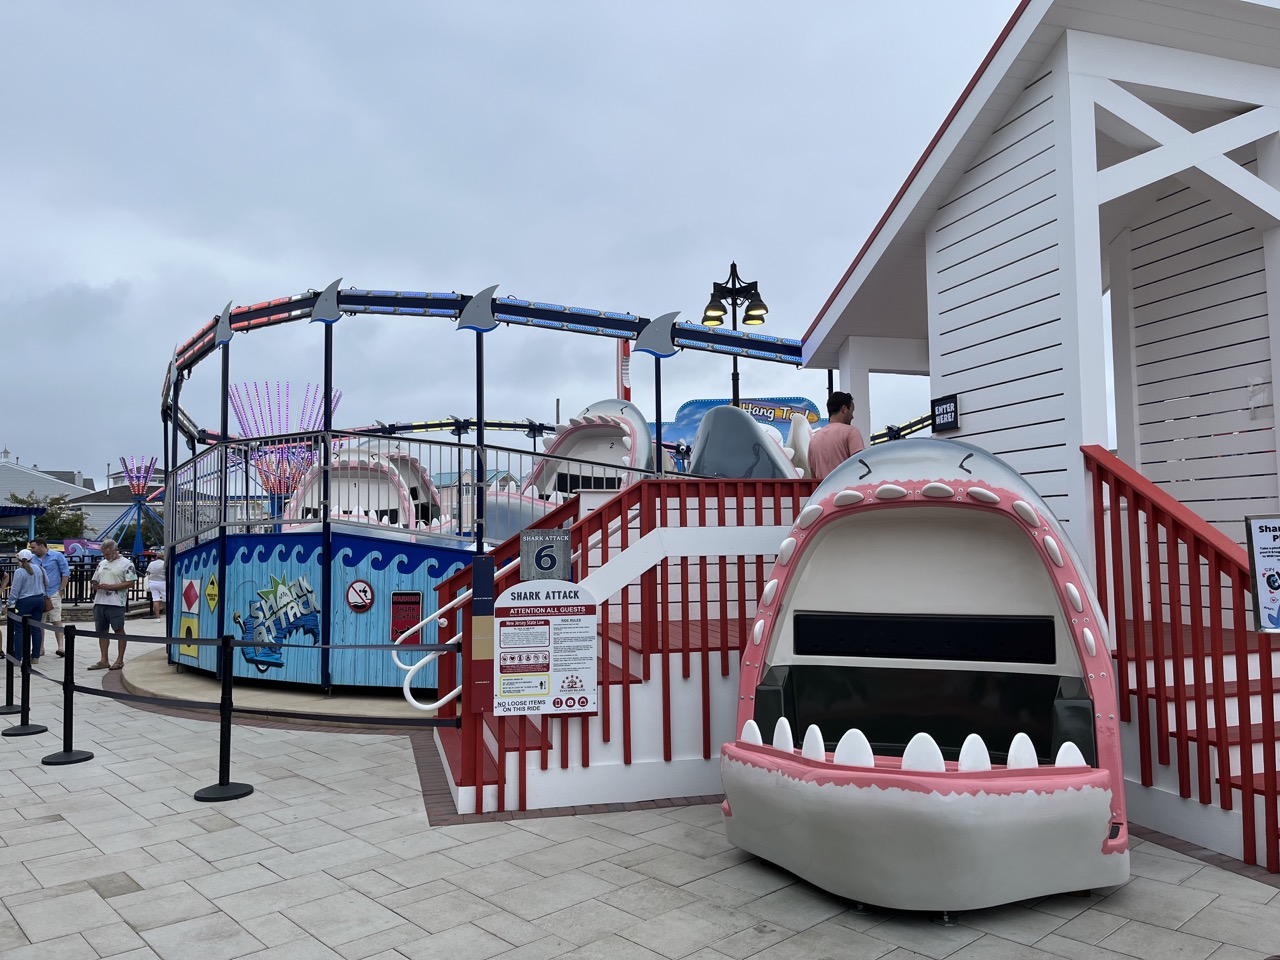 Shark Attack Ride at Fantasy Island Amusement Park in Beach Haven NJ